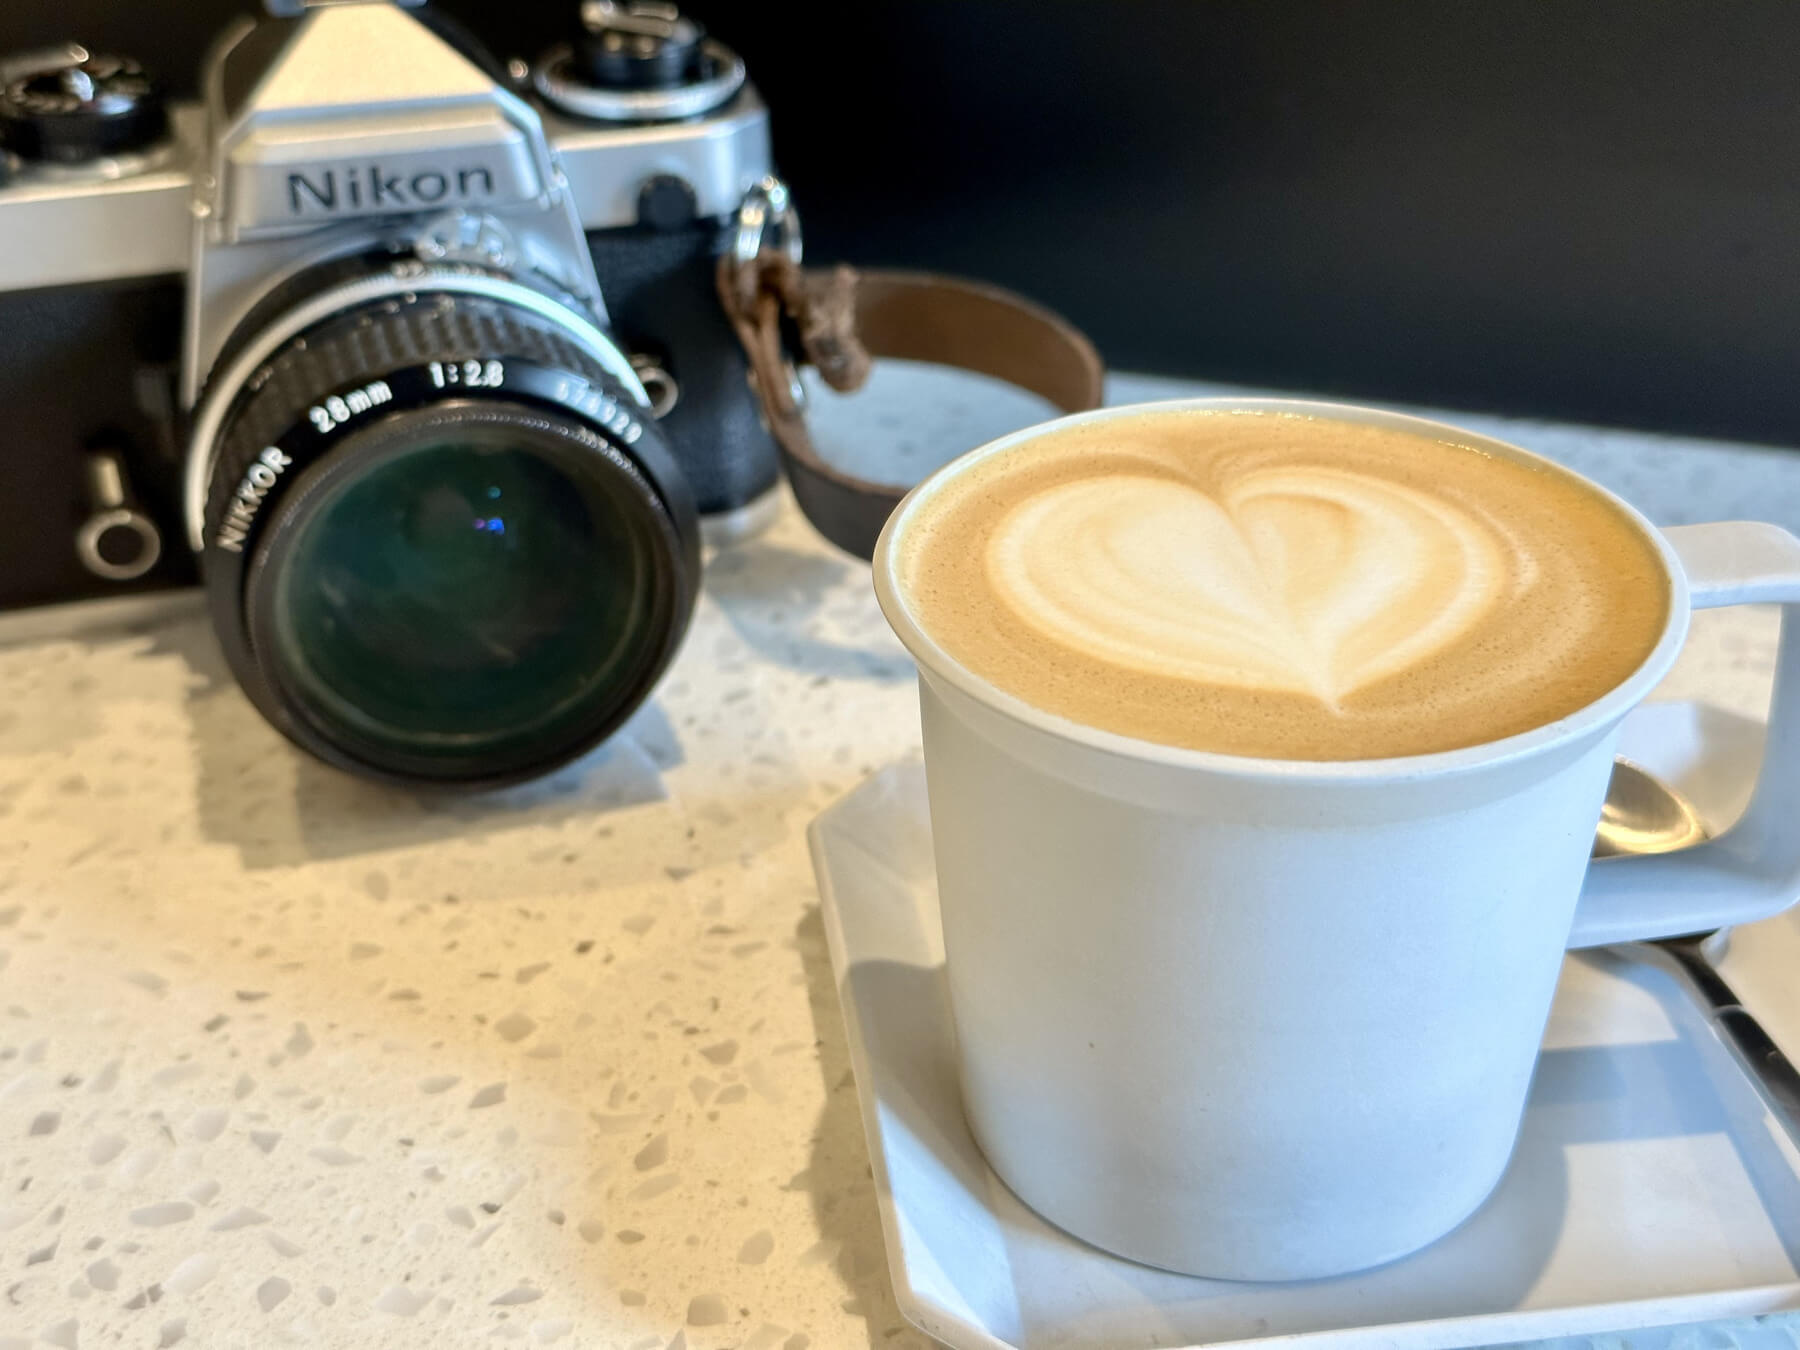 a photo of a latte, next to a nikon film camera